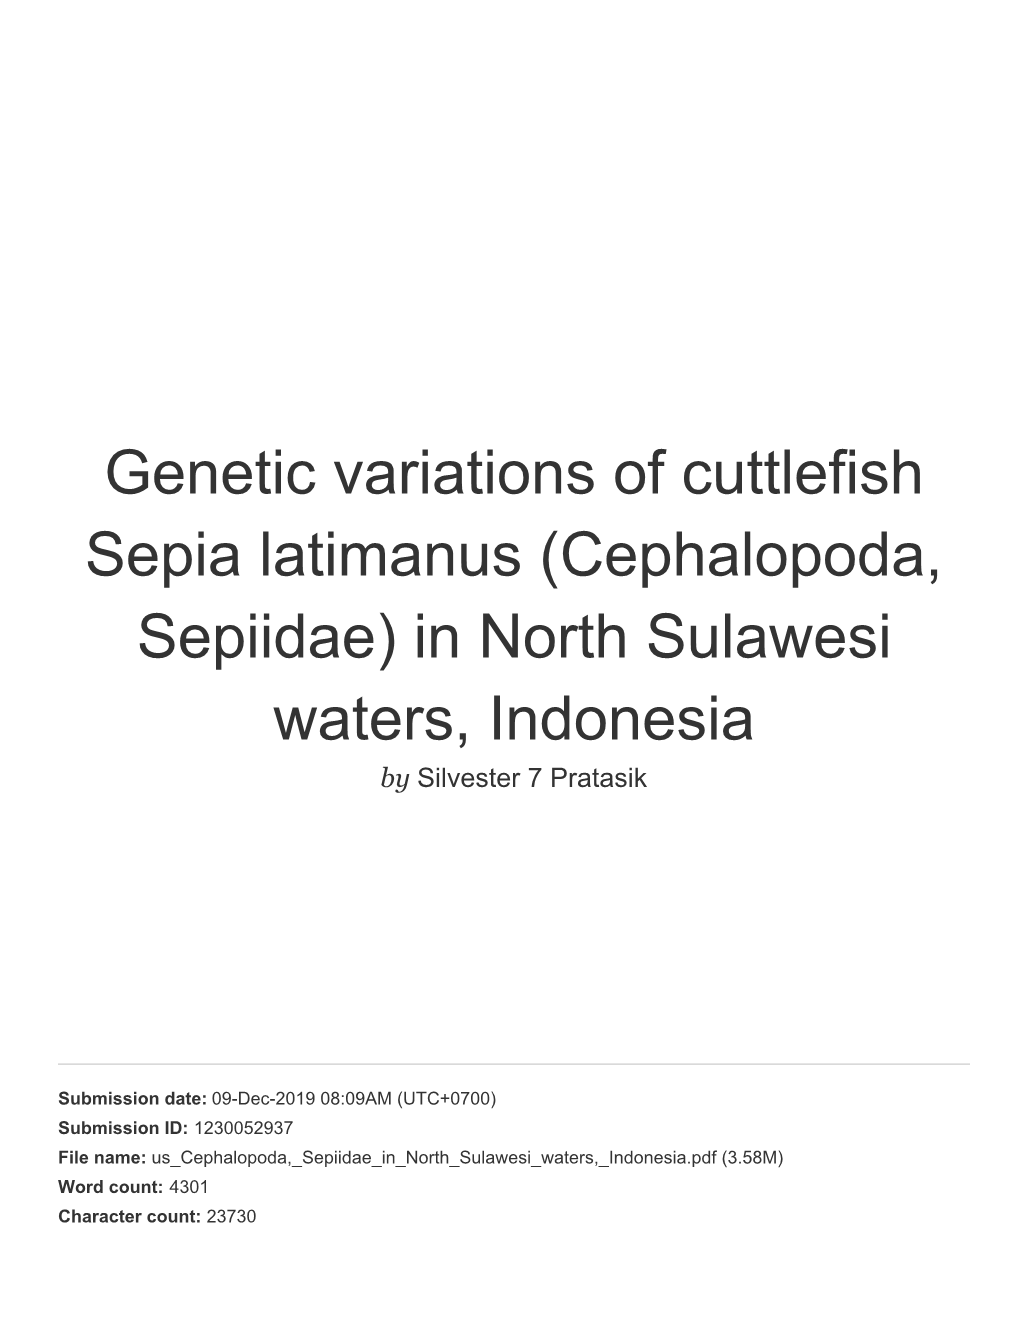 Genetic Variations of Cuttlefish Sepia Latimanus (Cephalopoda, Sepiidae) in North Sulawesi Waters, Indonesia by Silvester 7 Pratasik